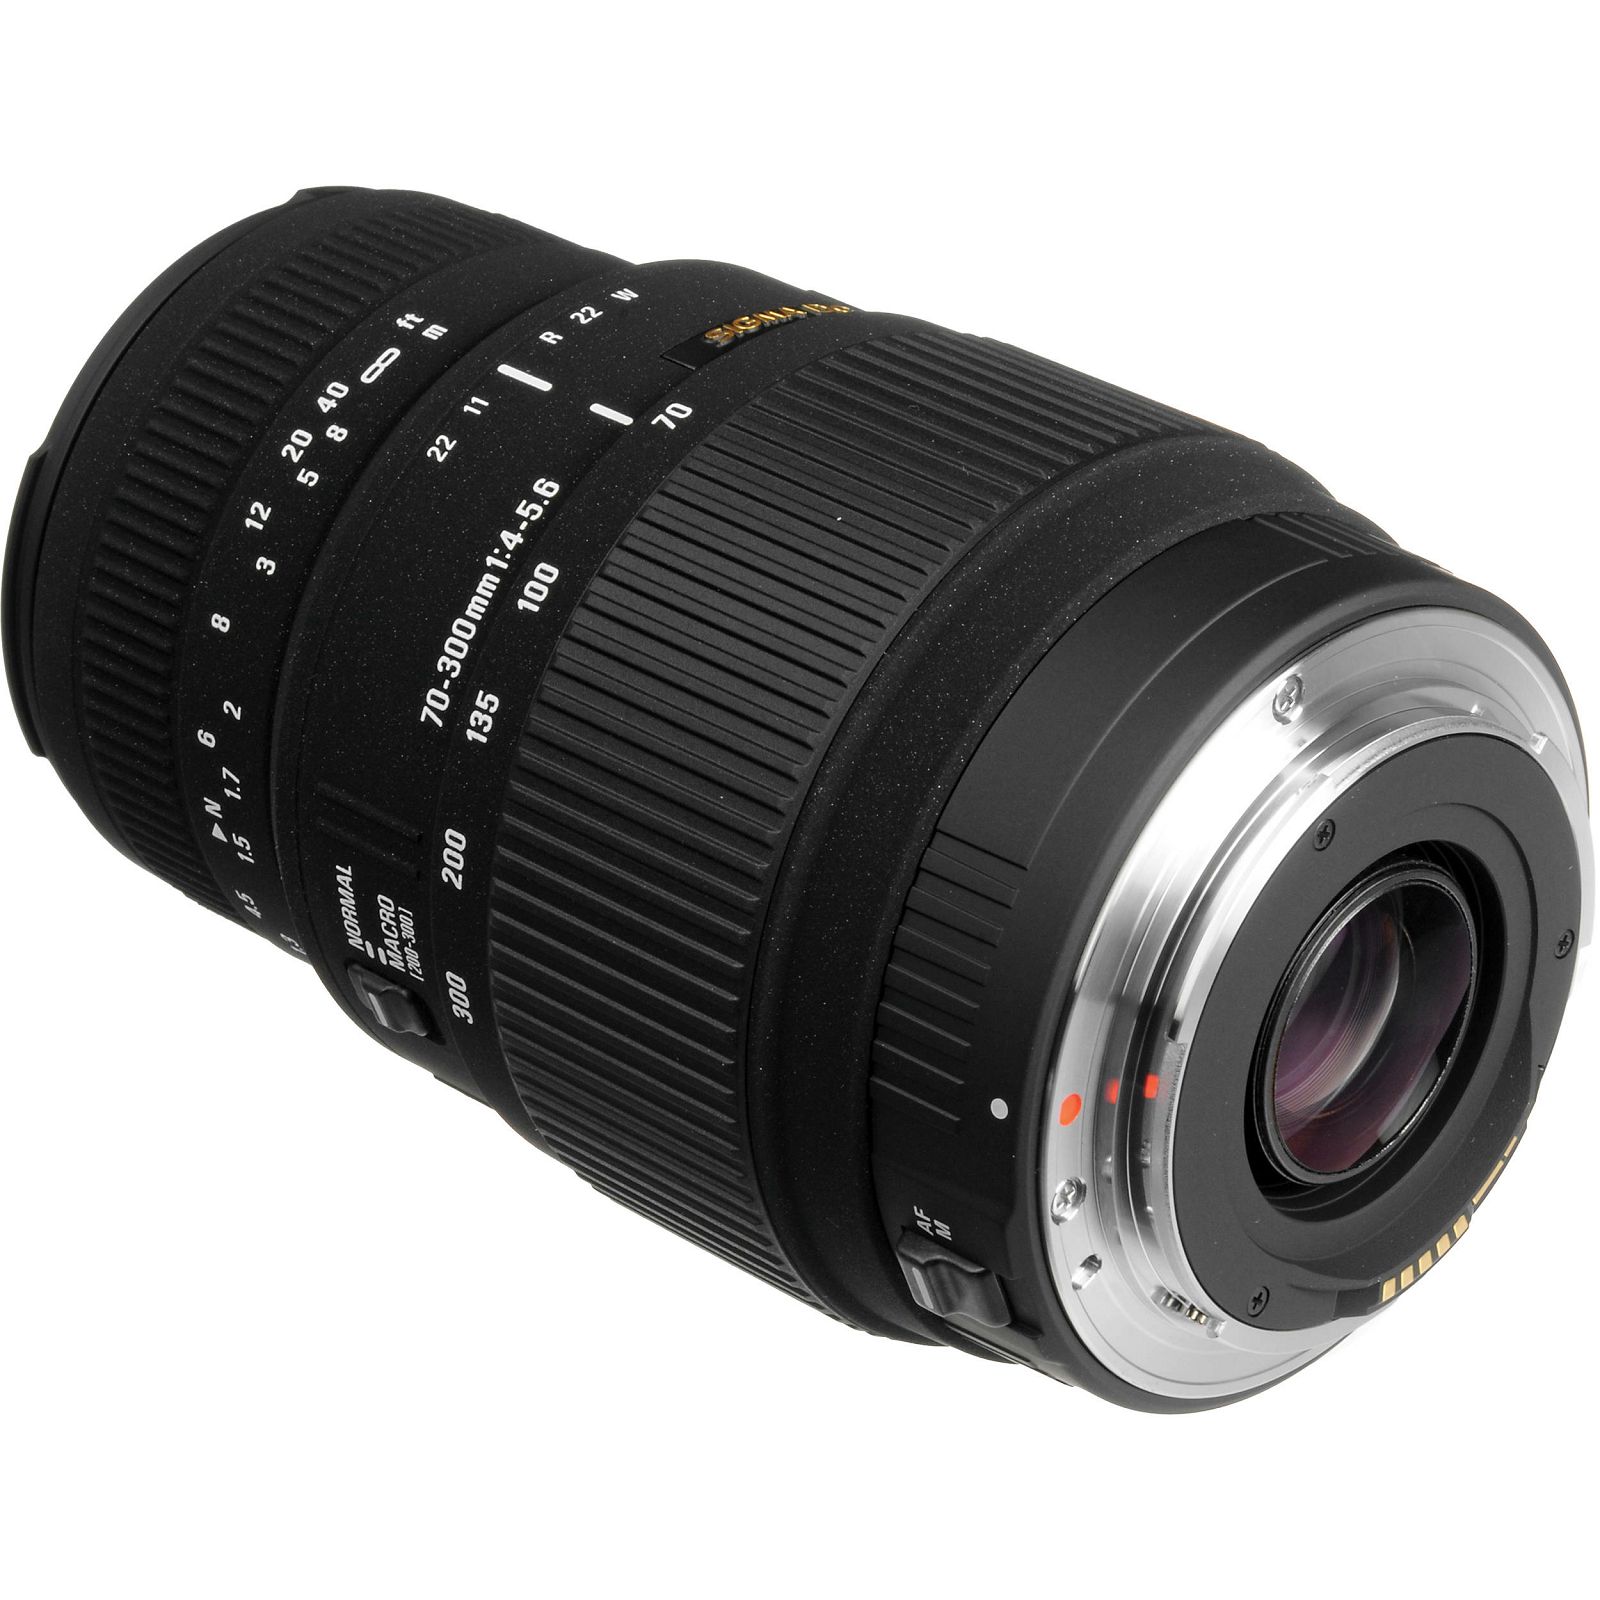 Sigma 70-300mm f/4-5.6 DG Macro telefoto objektiv za Nikon 70-300 F4-5.6 F/4,0-5,6 70-300/4-5,6